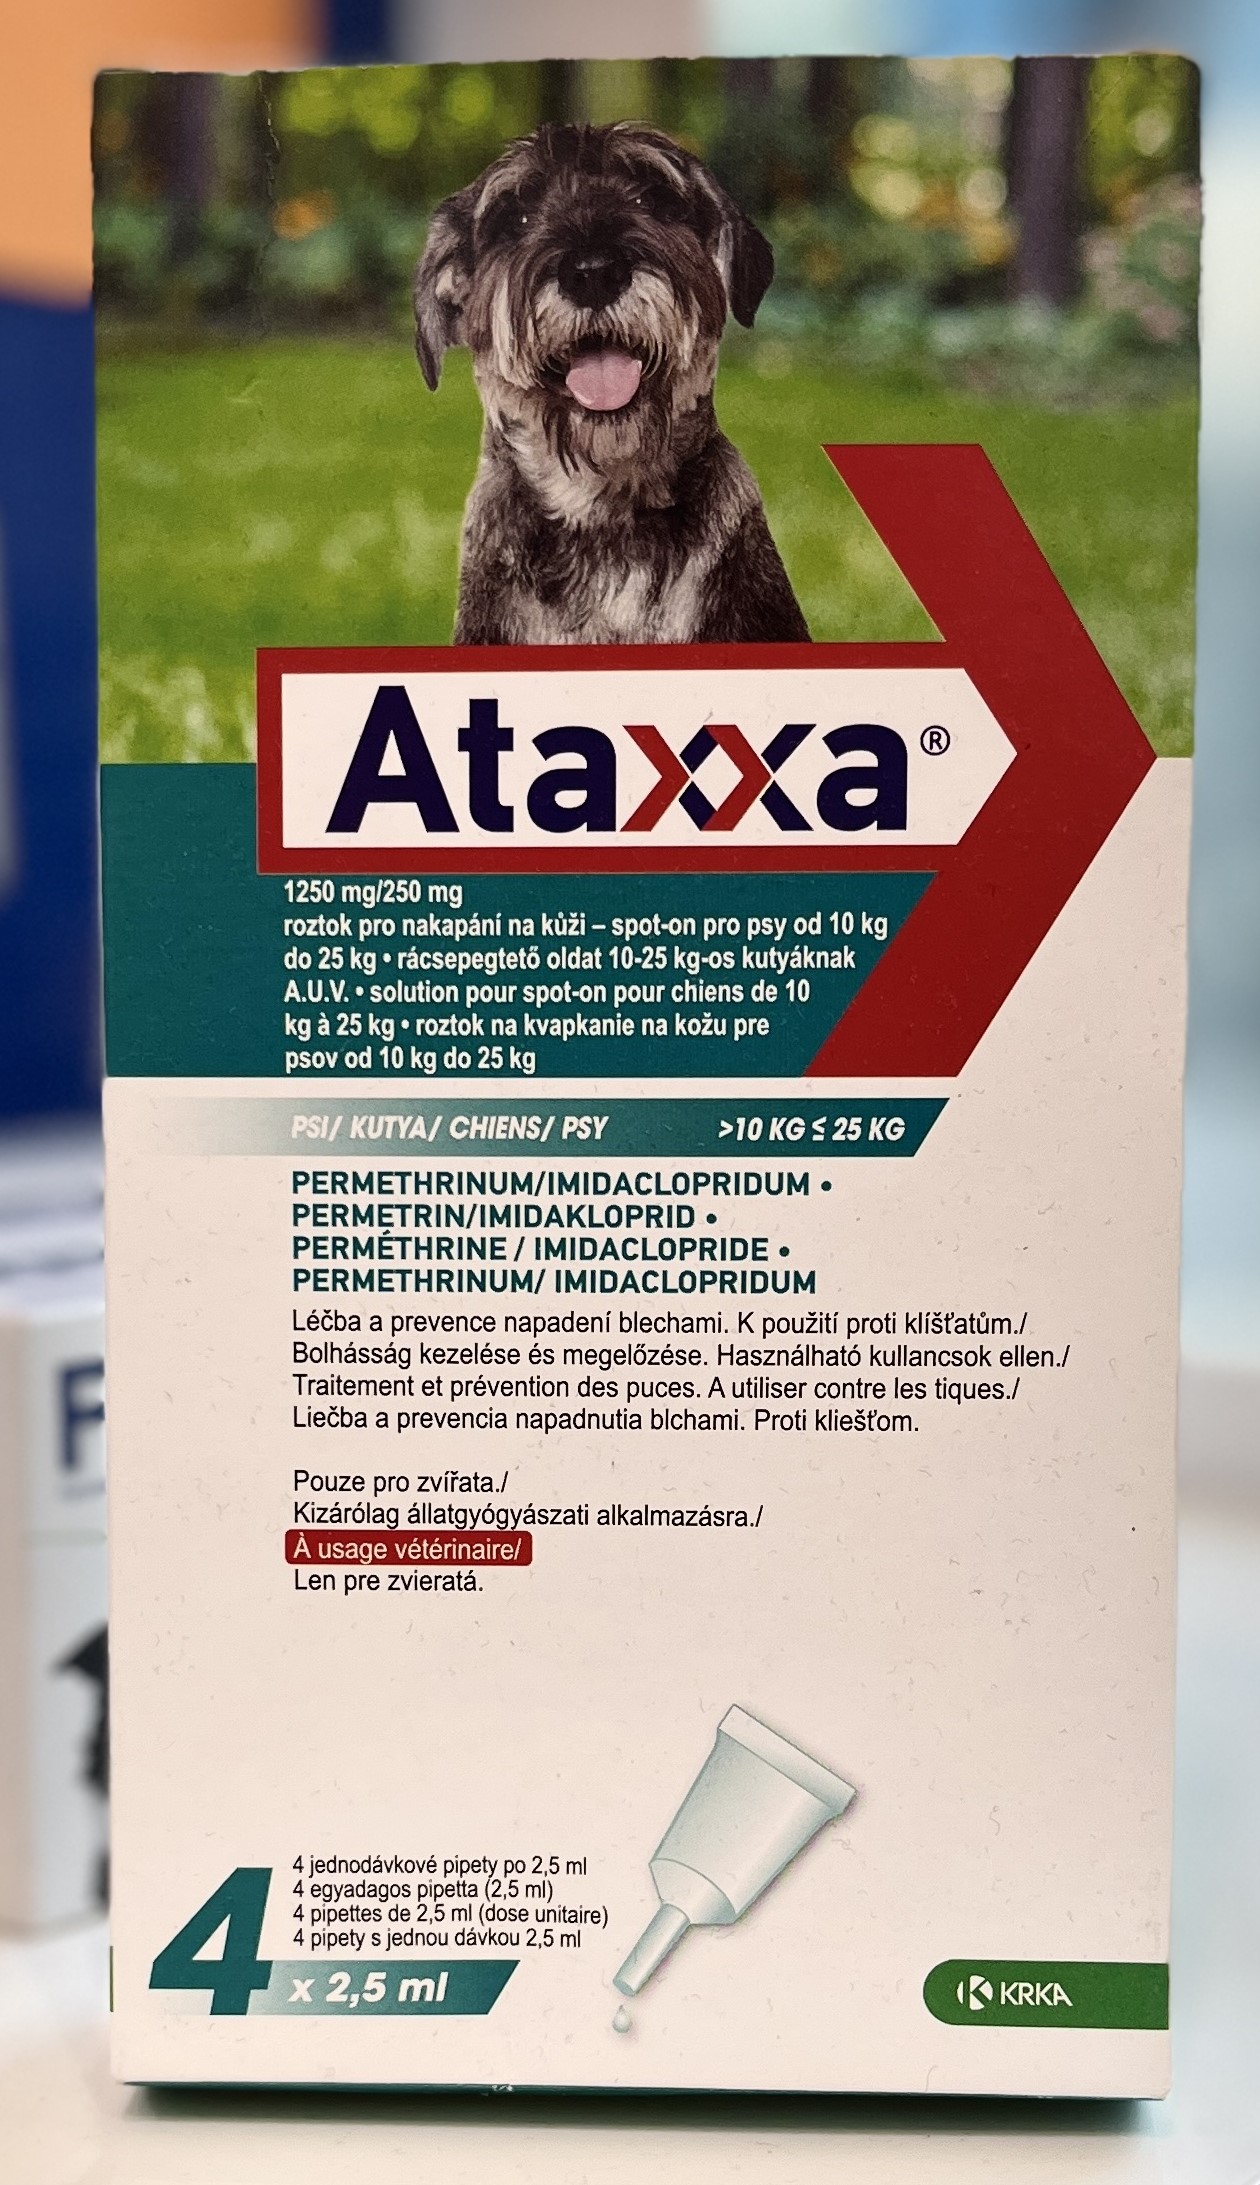 Comprar Ataxxa a Gran Farmacia Andorra Antiparasitari extern (spot on) contra puces, paparres i flebòtom (permetrina, imidacloprid)